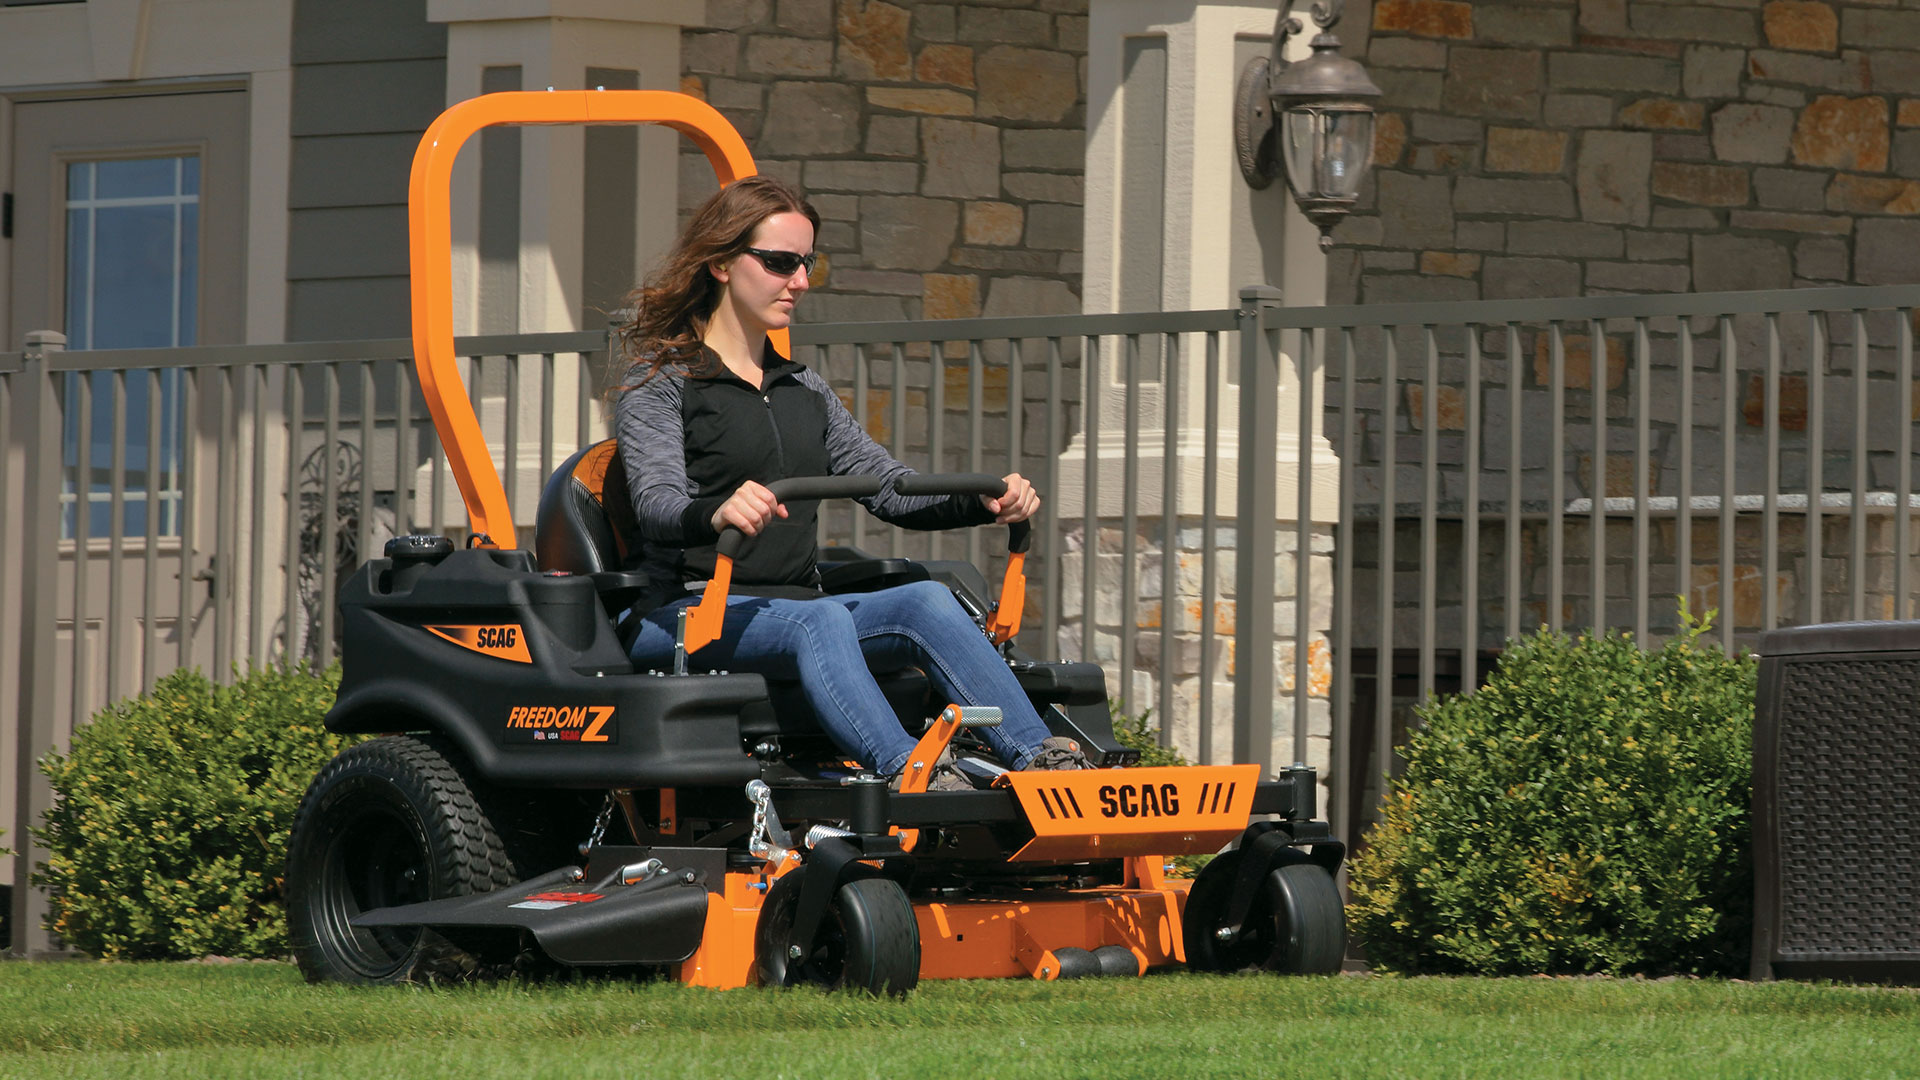 Freedom Z® Zero-Turn Riding Lawn Mower | Products | Scag®